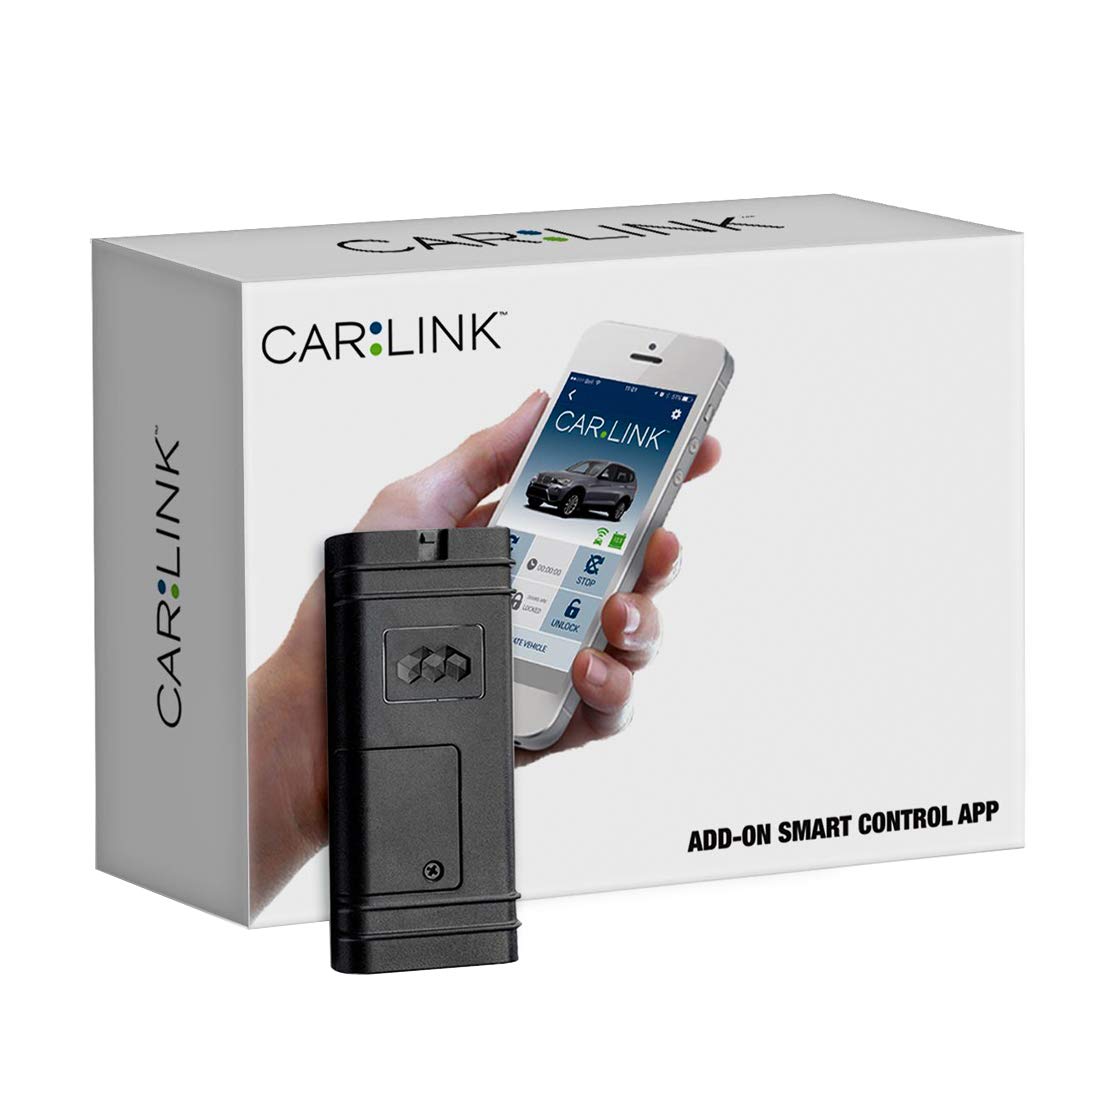 CARLINK ASCL6 원격 시작 셀룰러 인터페이스 모듈을 사용하면 휴대전화에서 자동차 시동을 걸 수 있습니다. 1년 포함